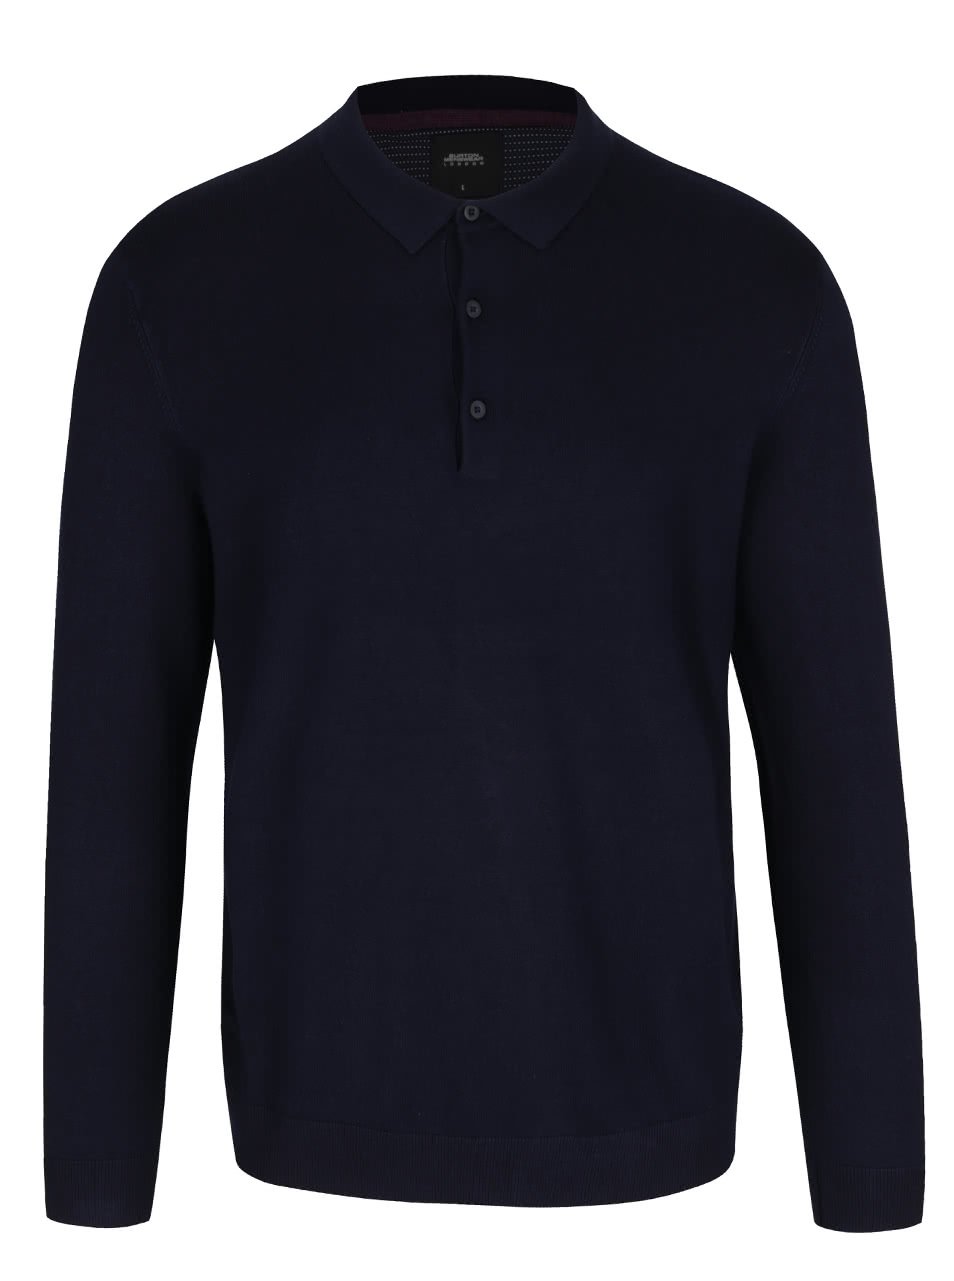 Tmavě modrý svetr s límečkem Burton Menswear London